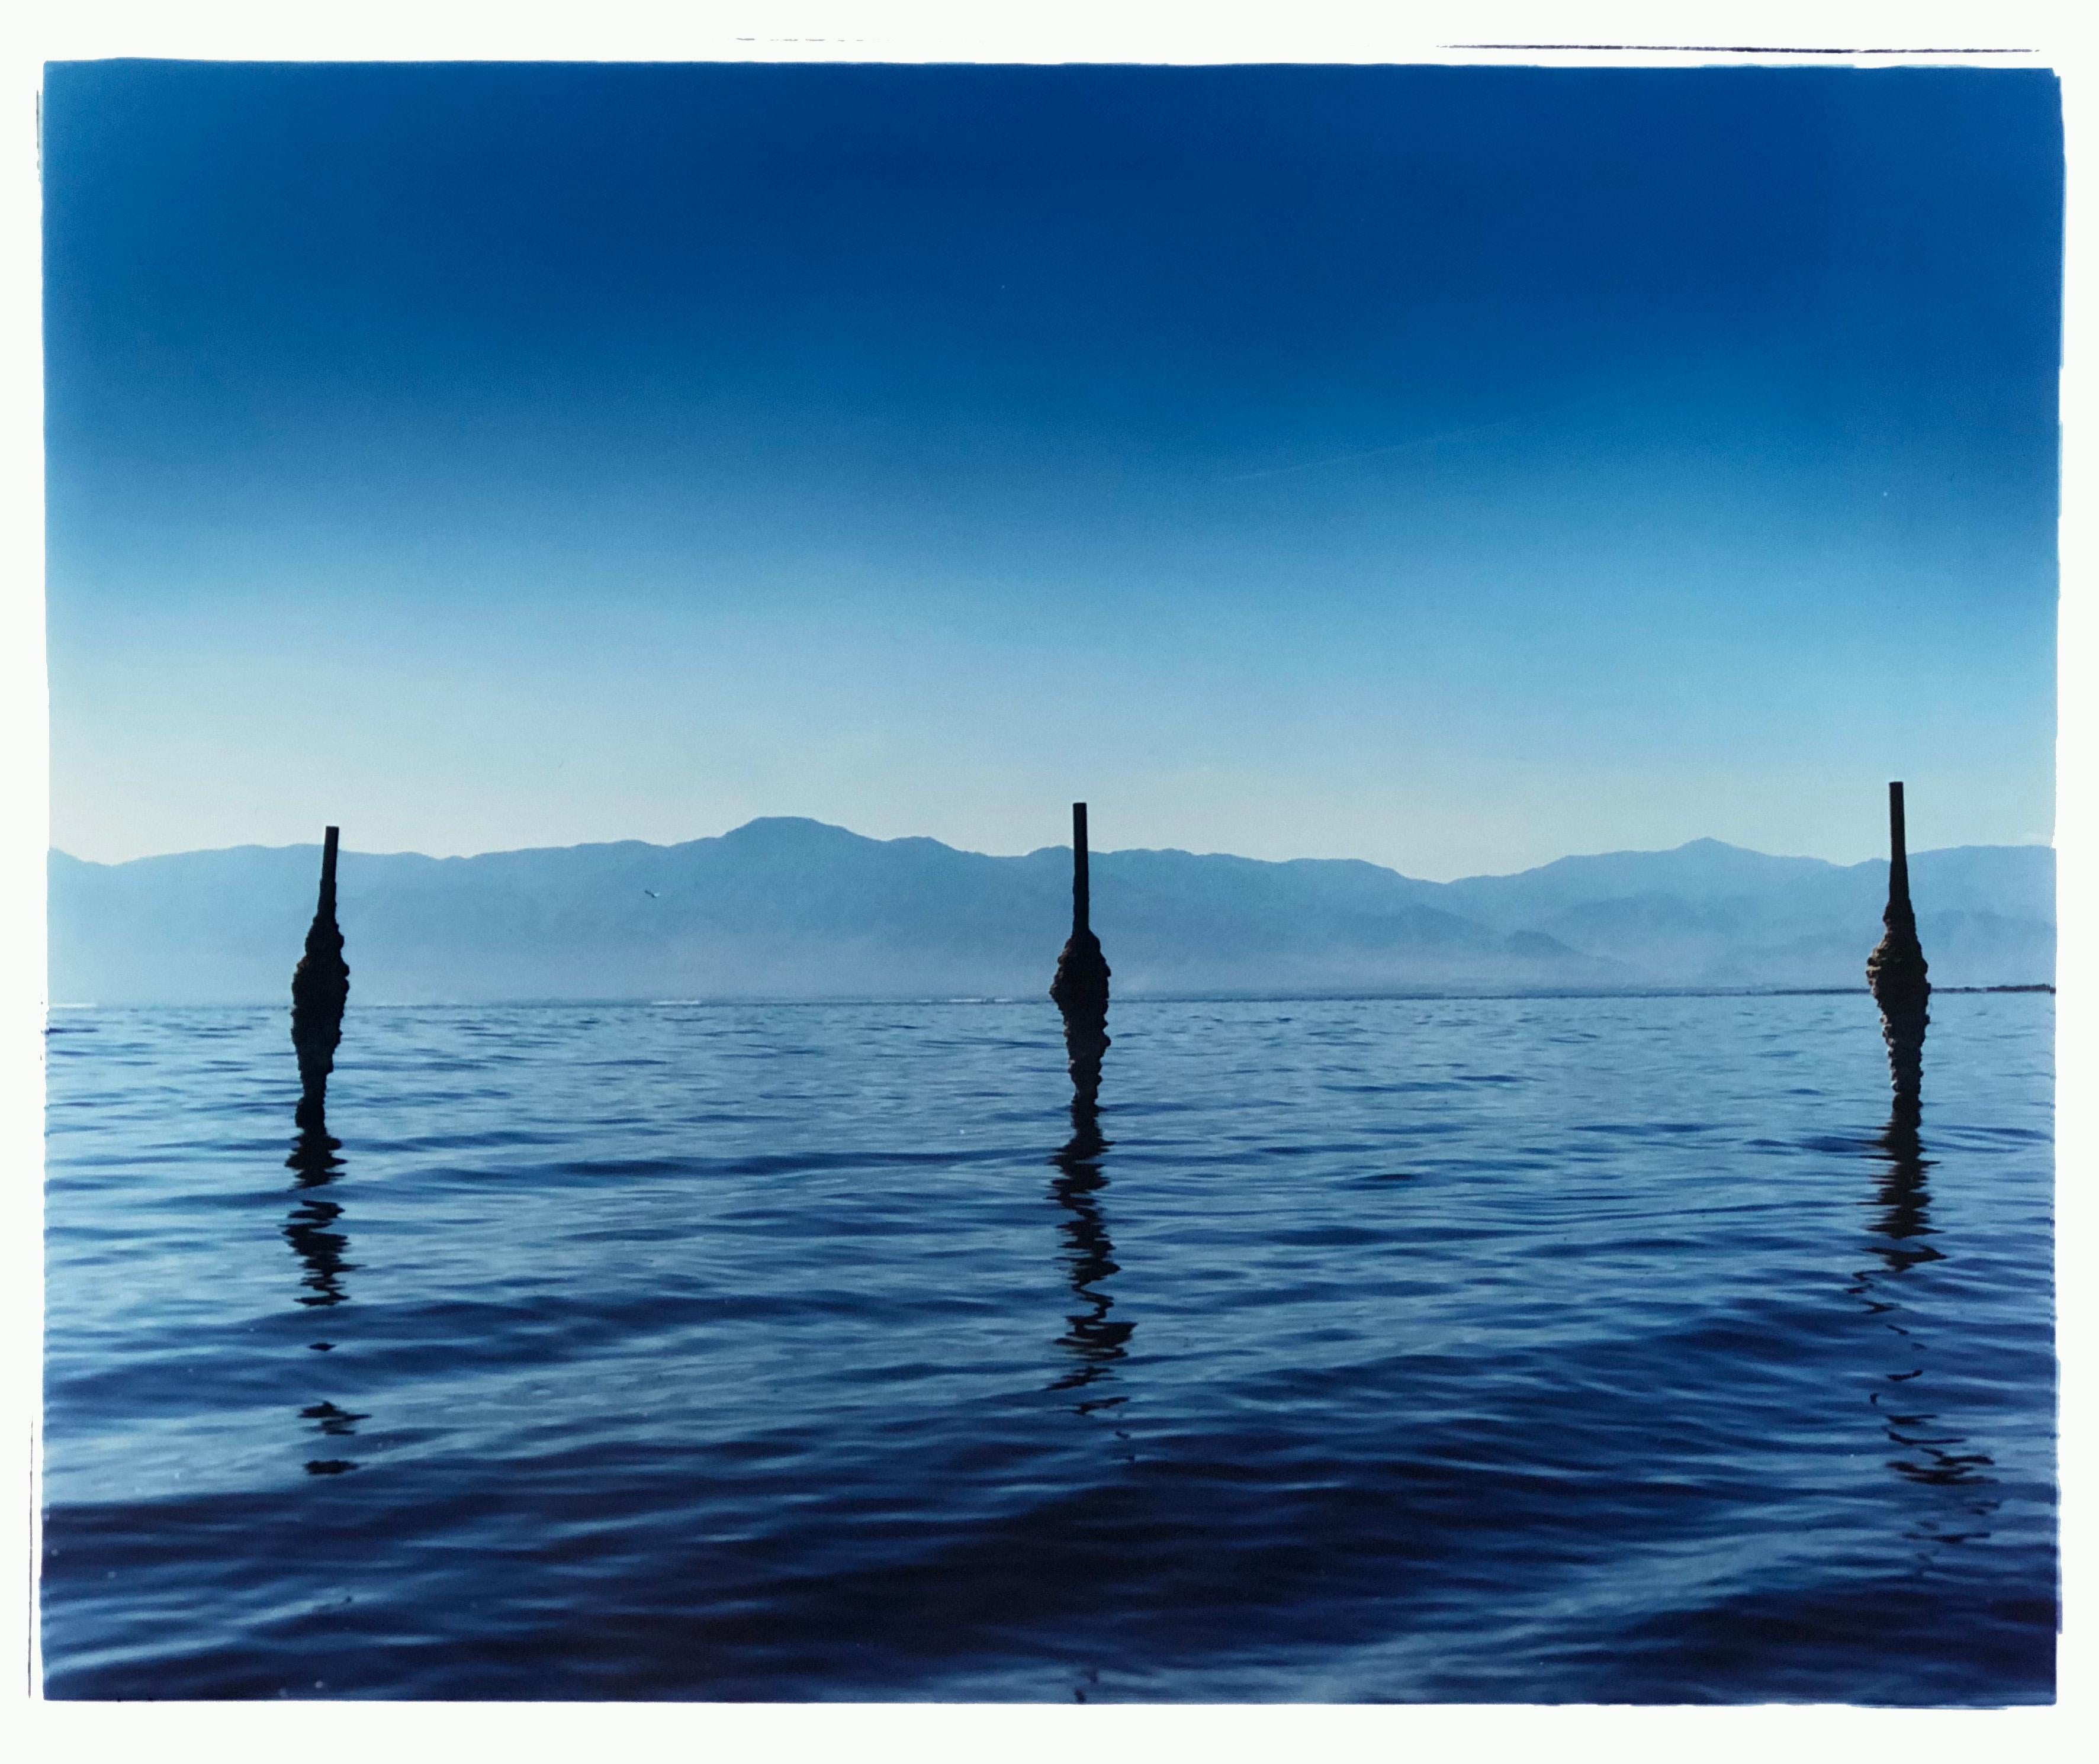 Richard Heeps Landscape Photograph - Jetty II - North Shore Yacht Club, Salton Sea, California - Color photography